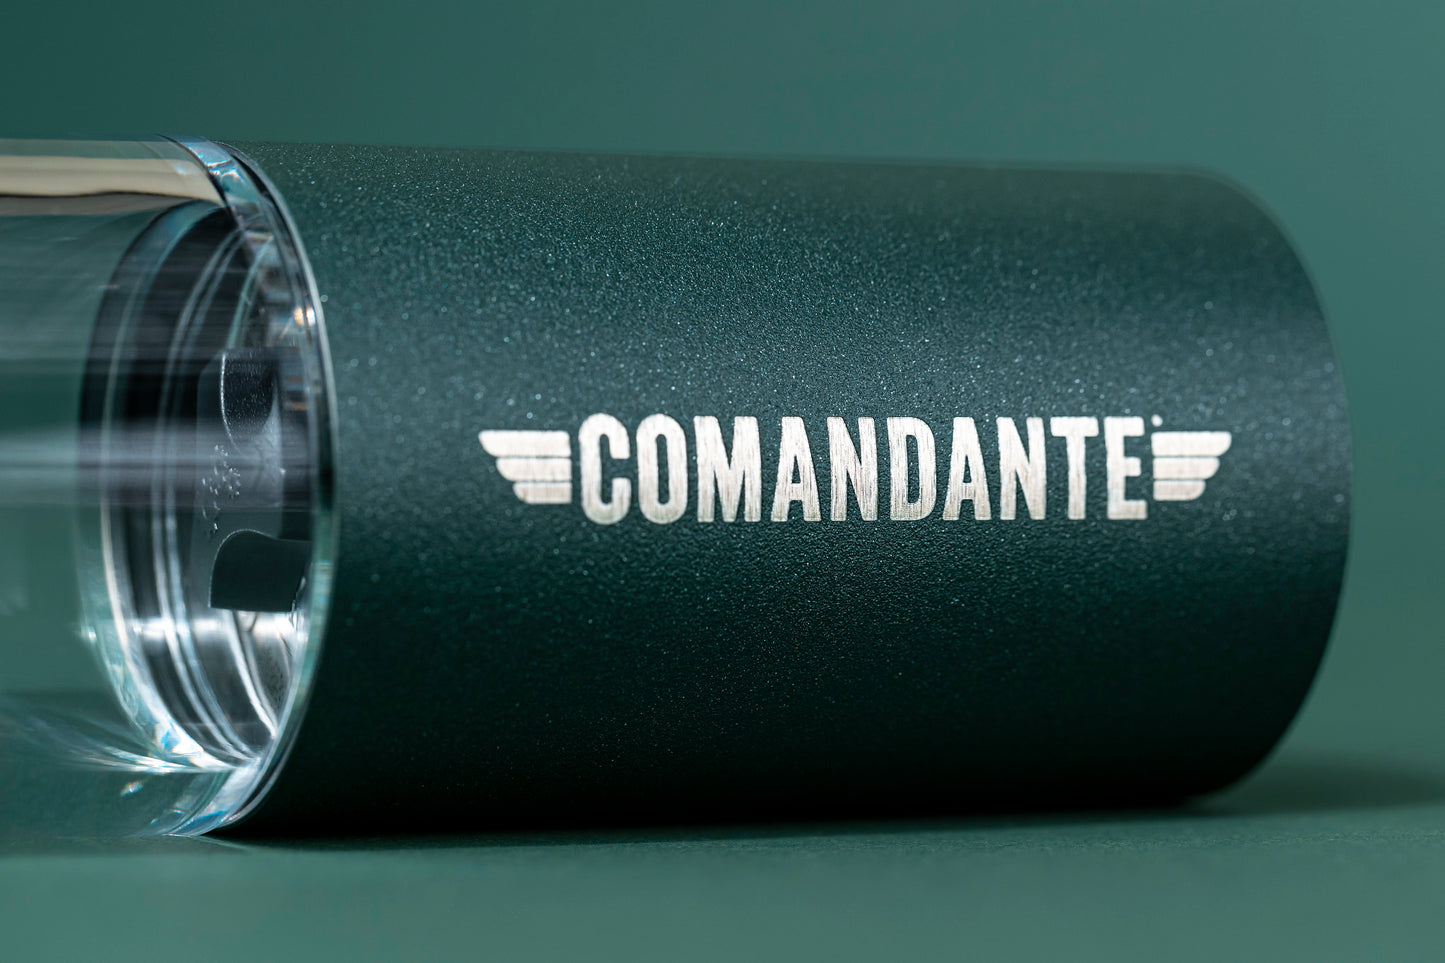 COMANDANTE - MK4 Nitro Blade C40 grinder - Racing GREEN